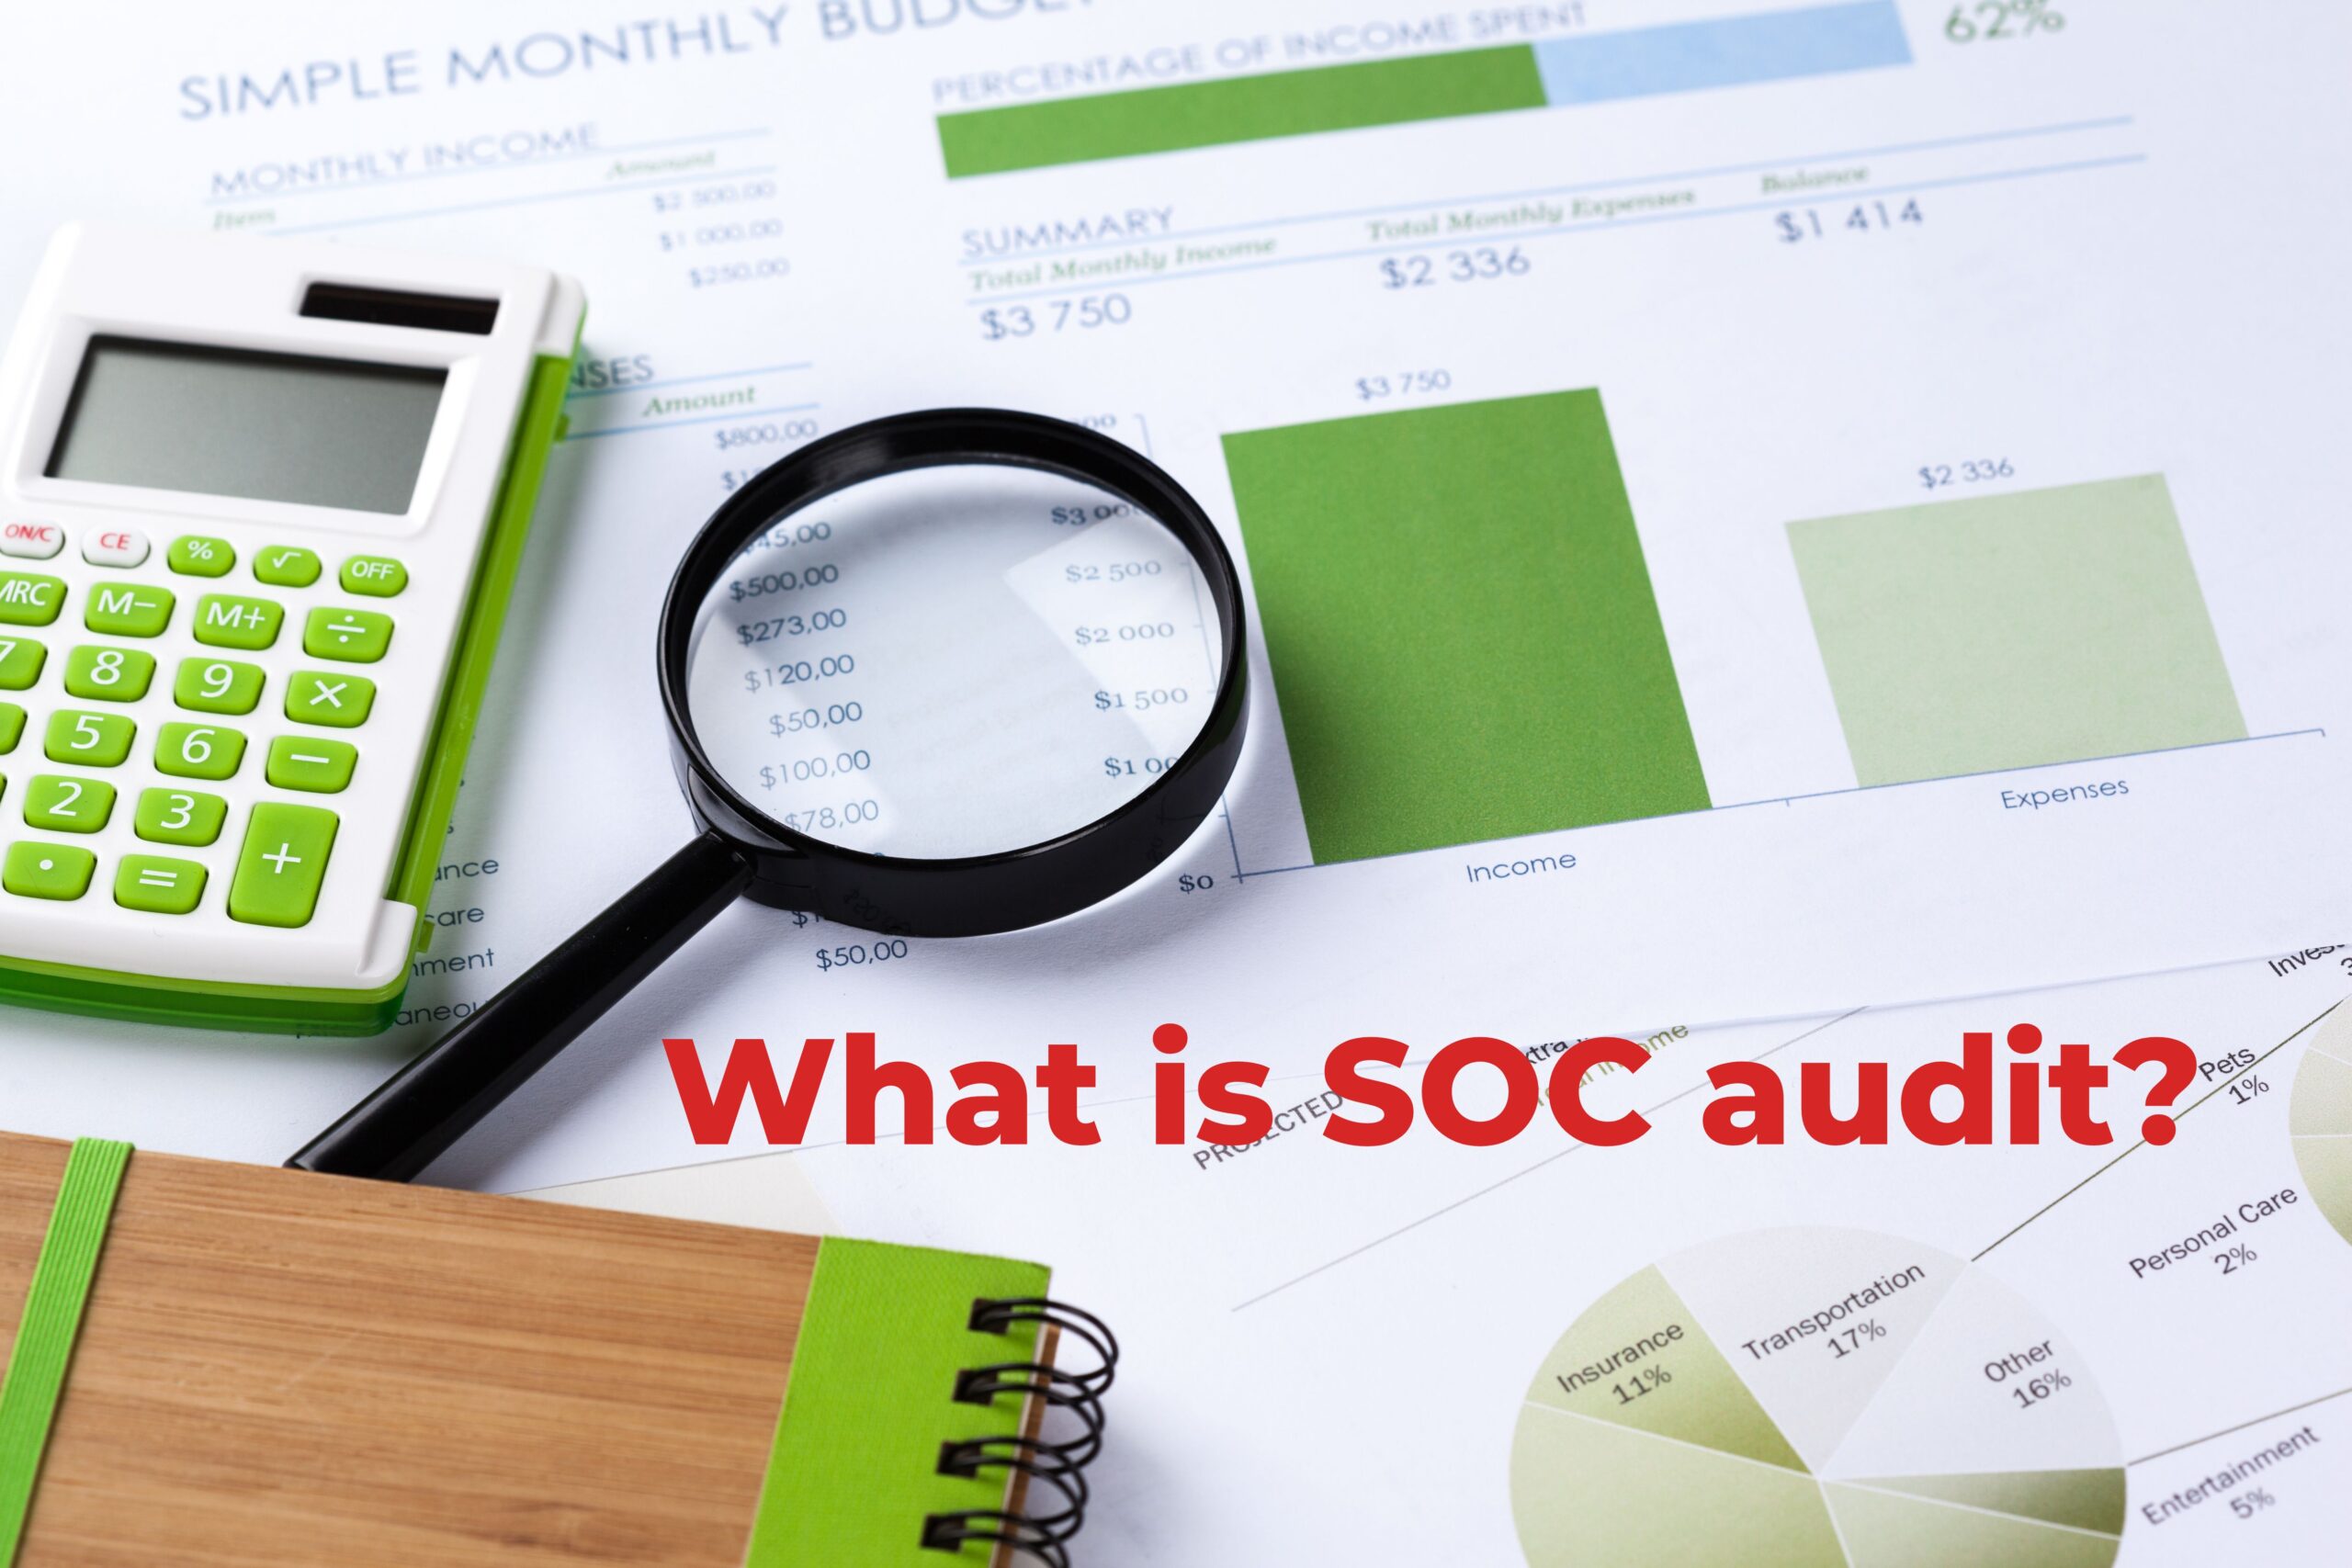 What is SOC audit?